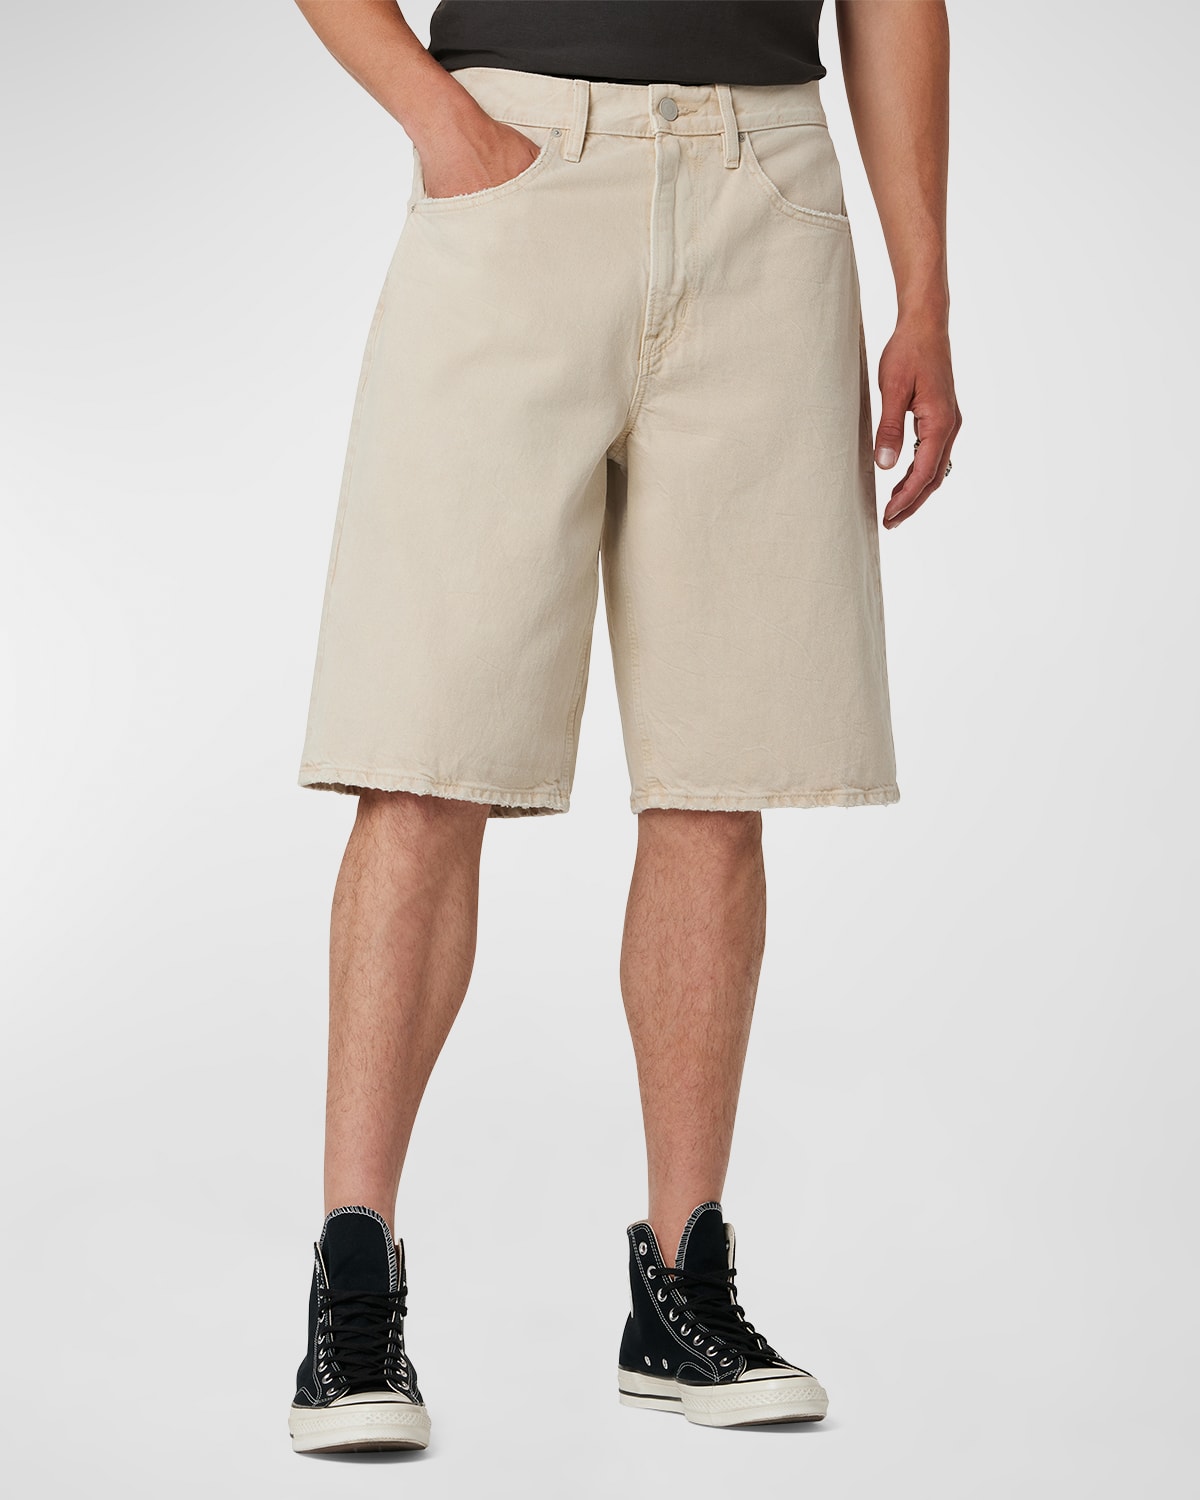 Men's '90s Baggy Flat-Front Shorts